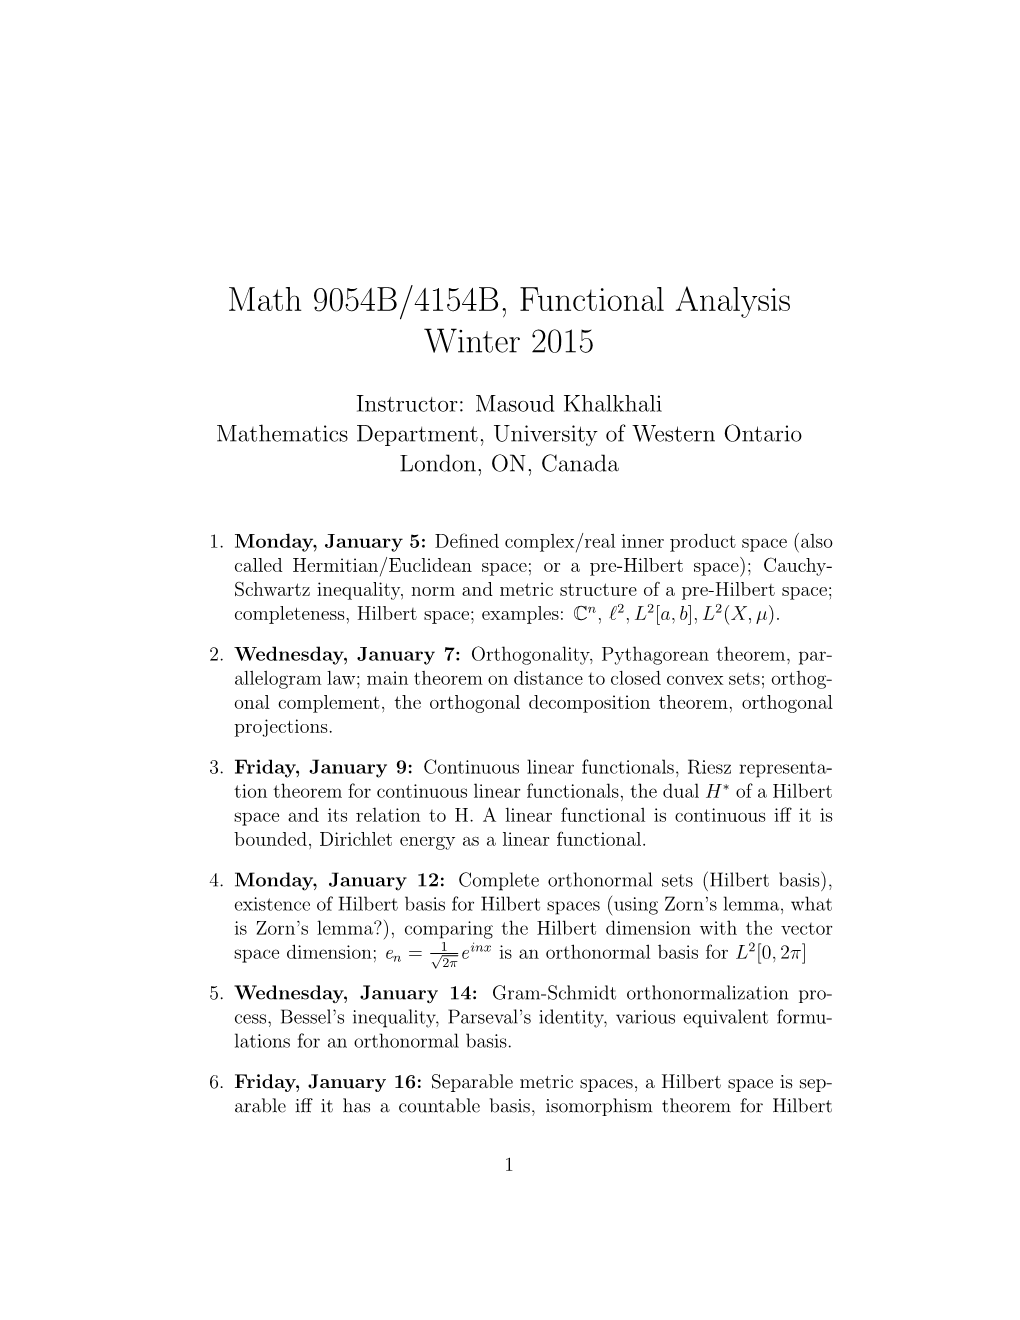 Math 9054B/4154B, Functional Analysis Winter 2015